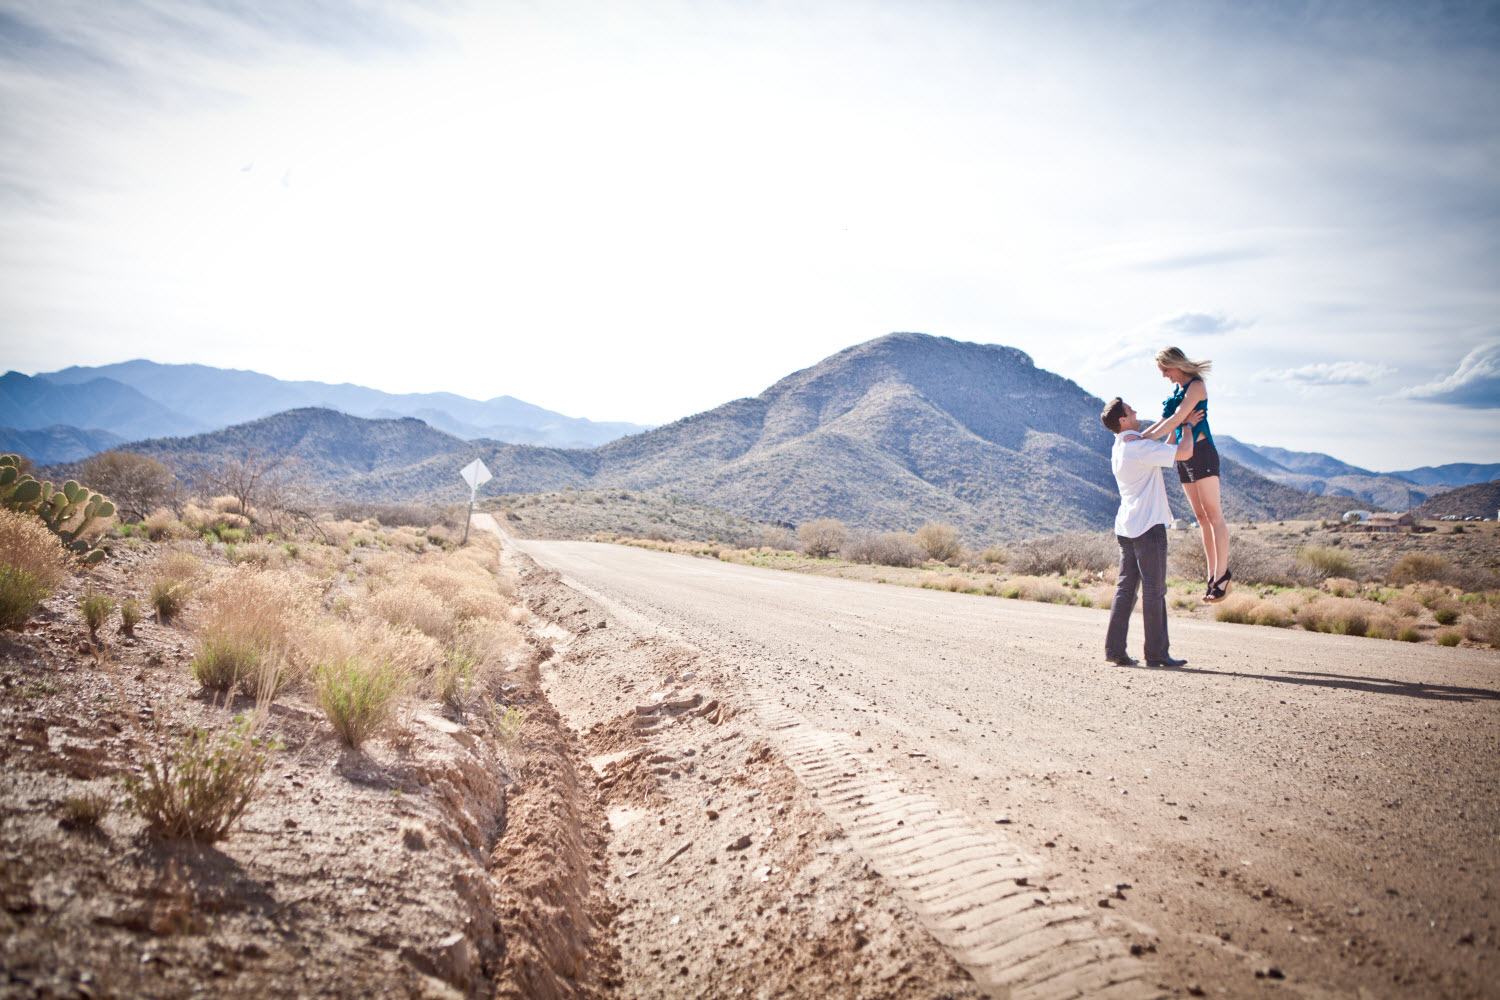  in Arizona desert with sprawling mountains in background OneWedcom